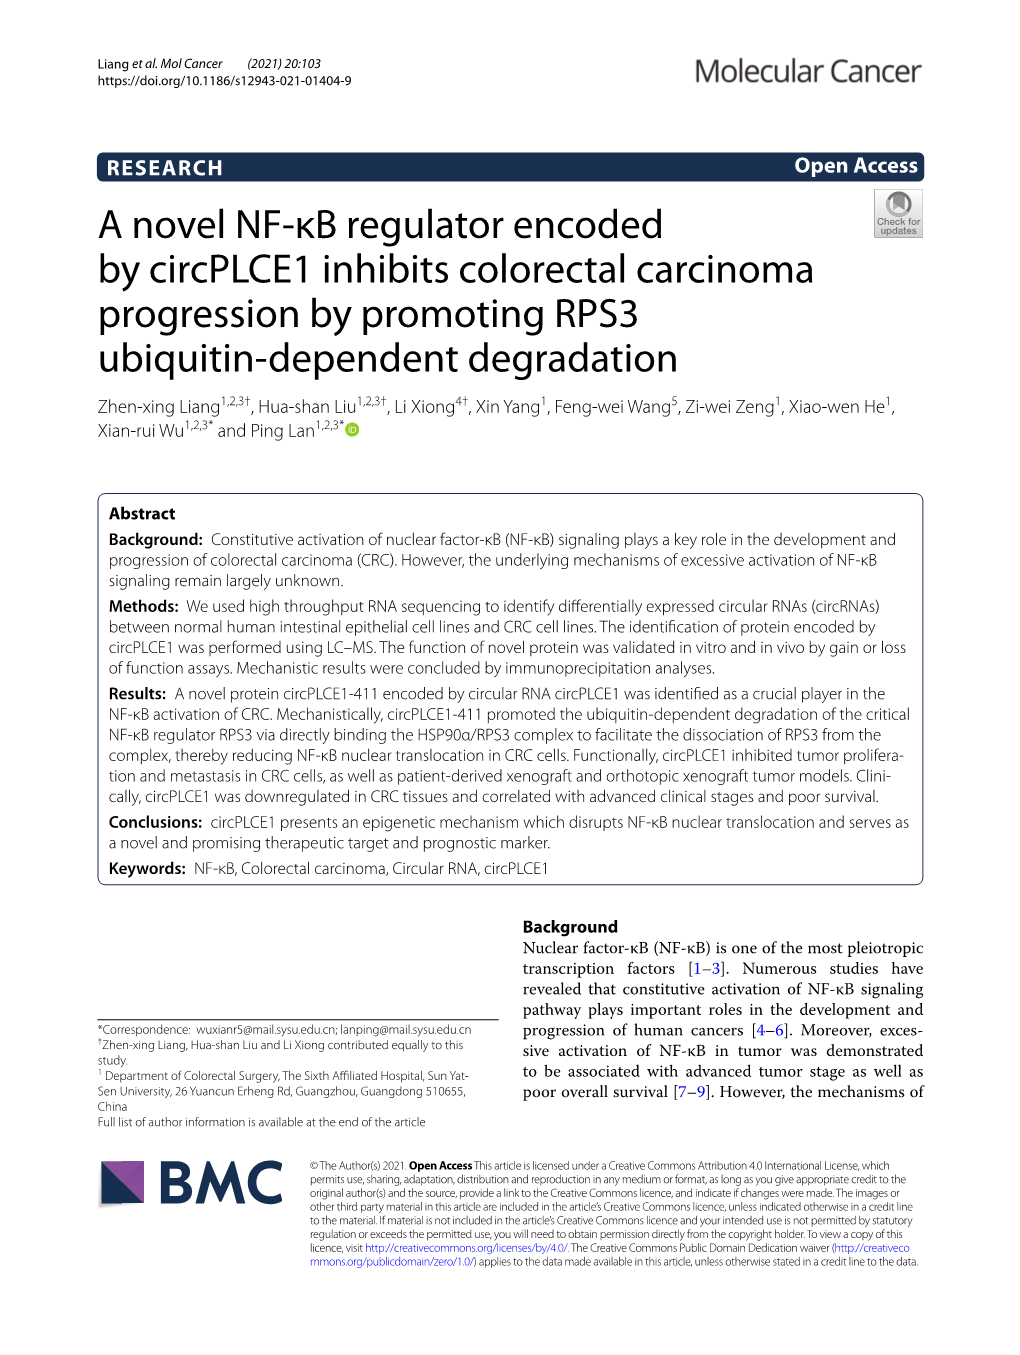 A Novel NF-Κb Regulator Encoded by Circplce1 Inhibits Colorectal